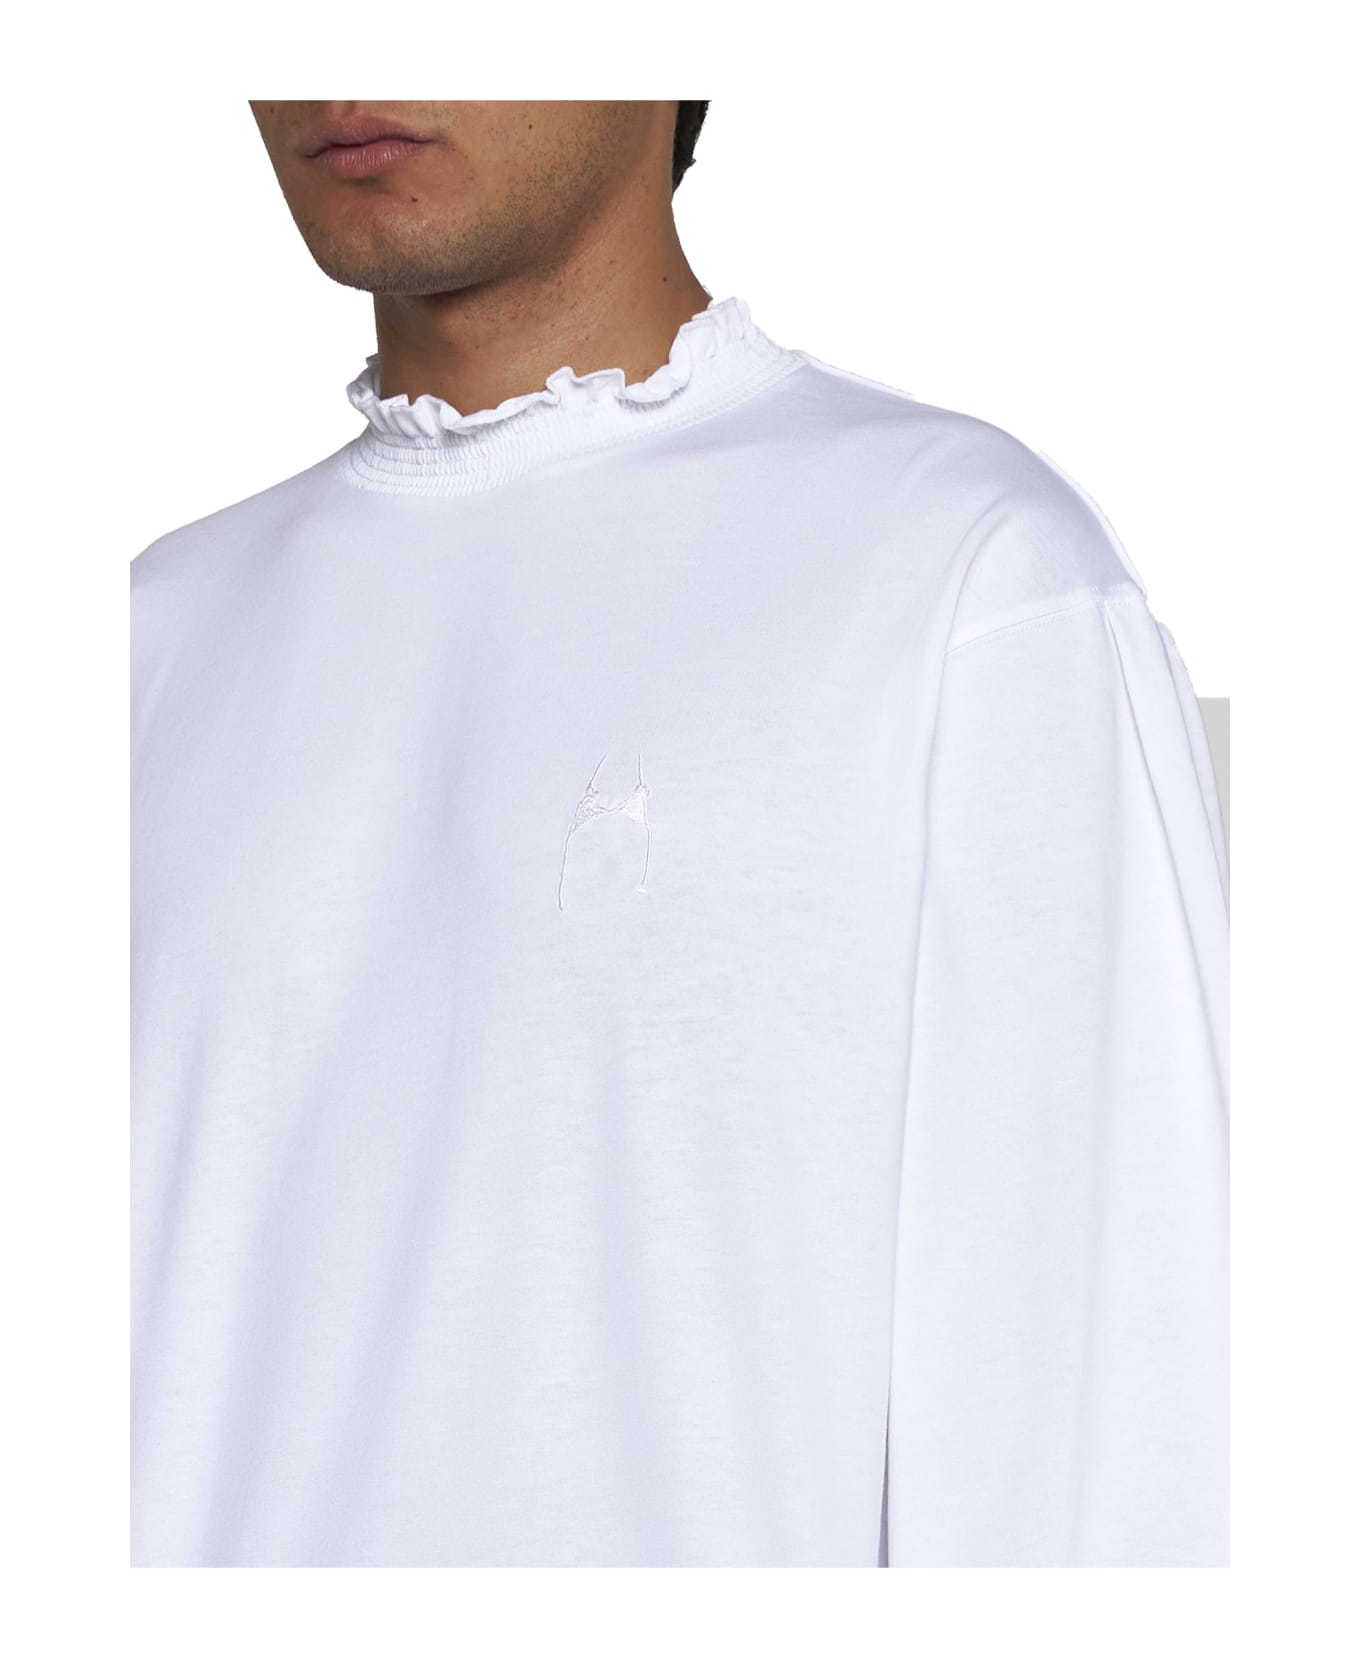 Random Identities T-Shirt - White シャツ